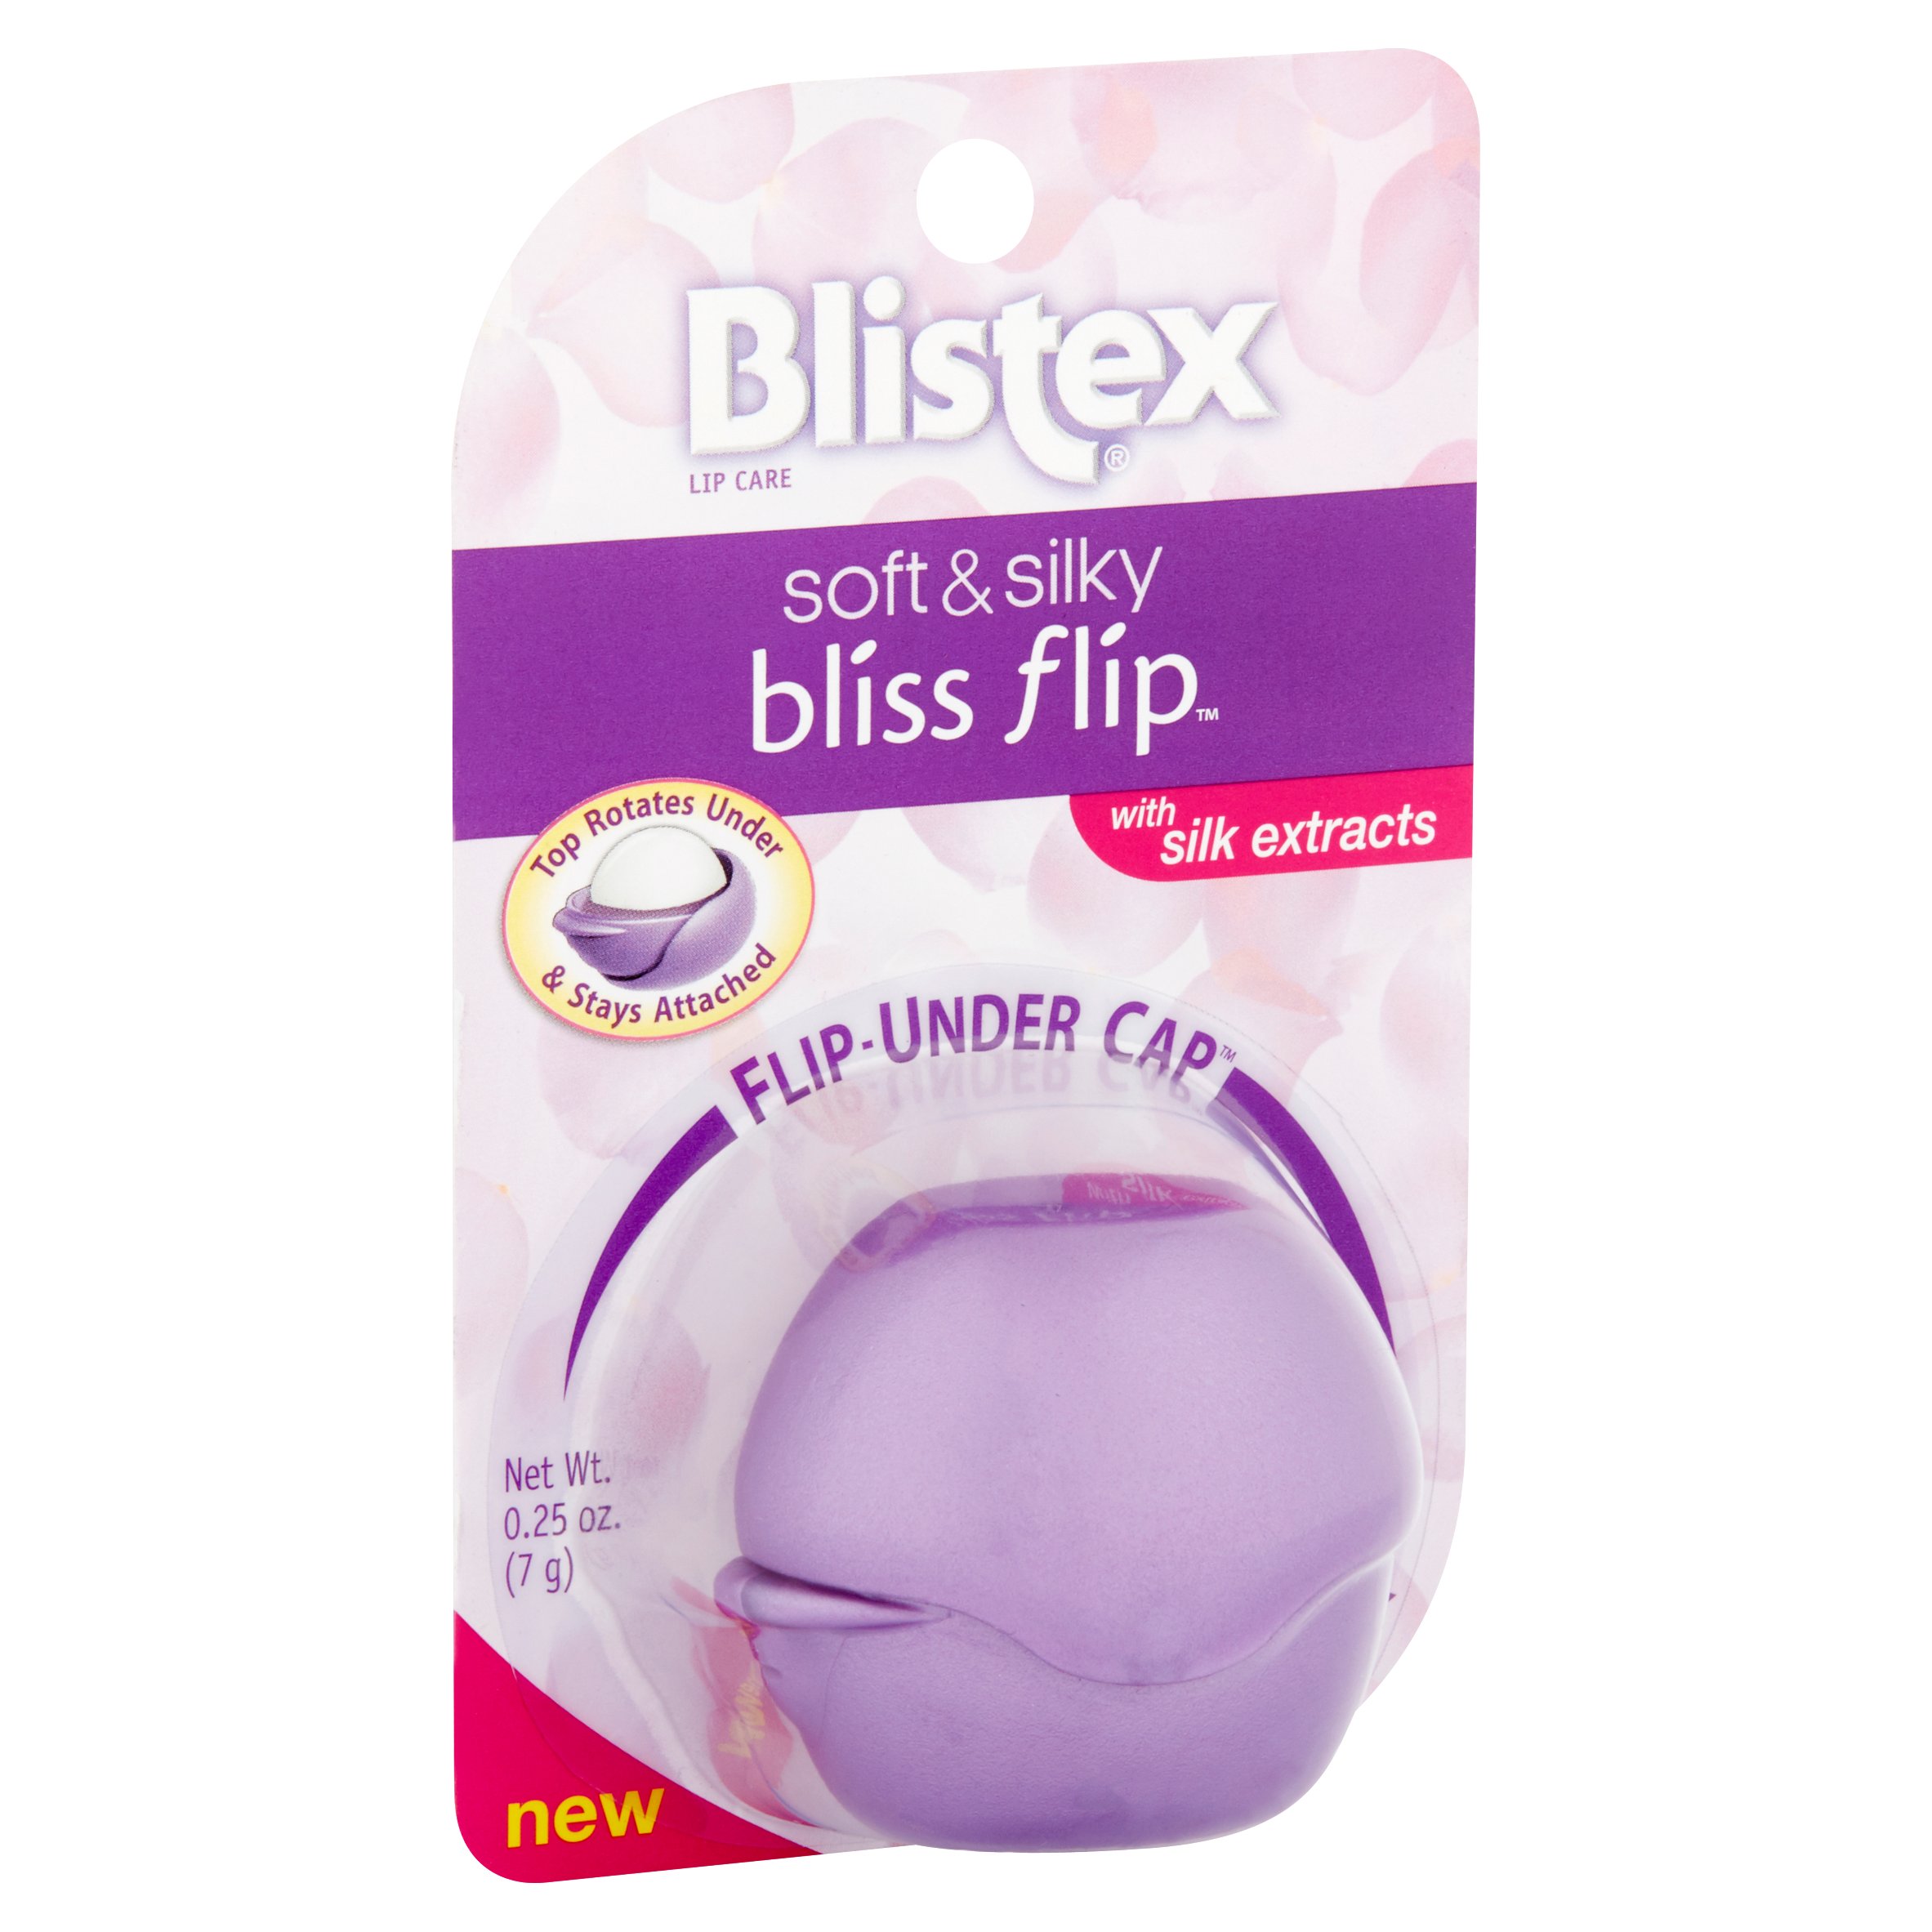 Blistex Bliss Flip Soft & Silky Lip Balm - image 2 of 5